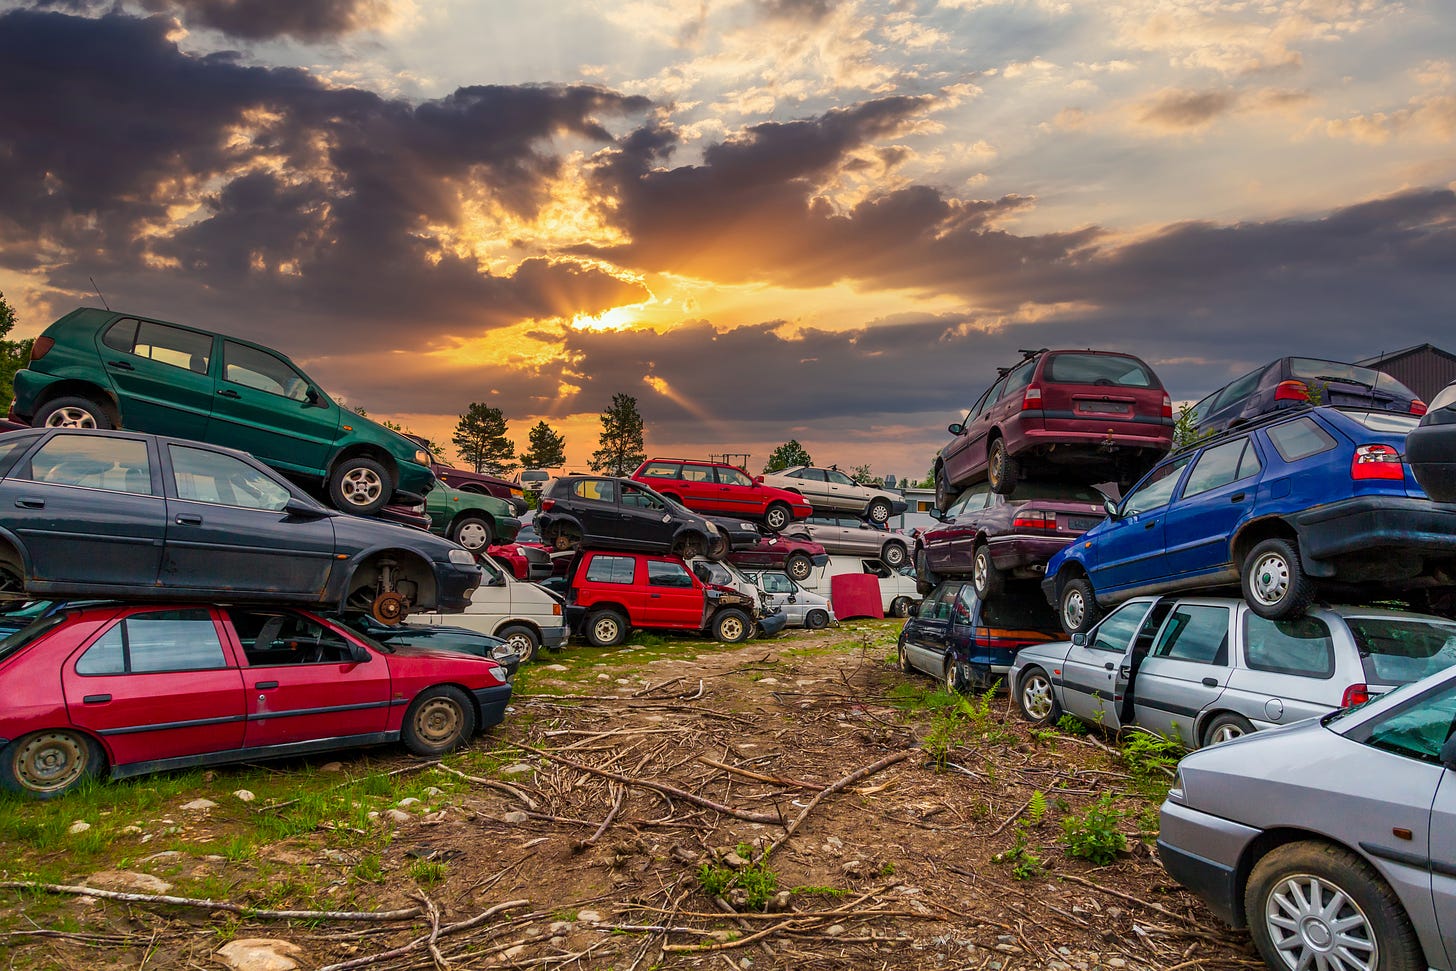 Cars piled ina junkard at sunset